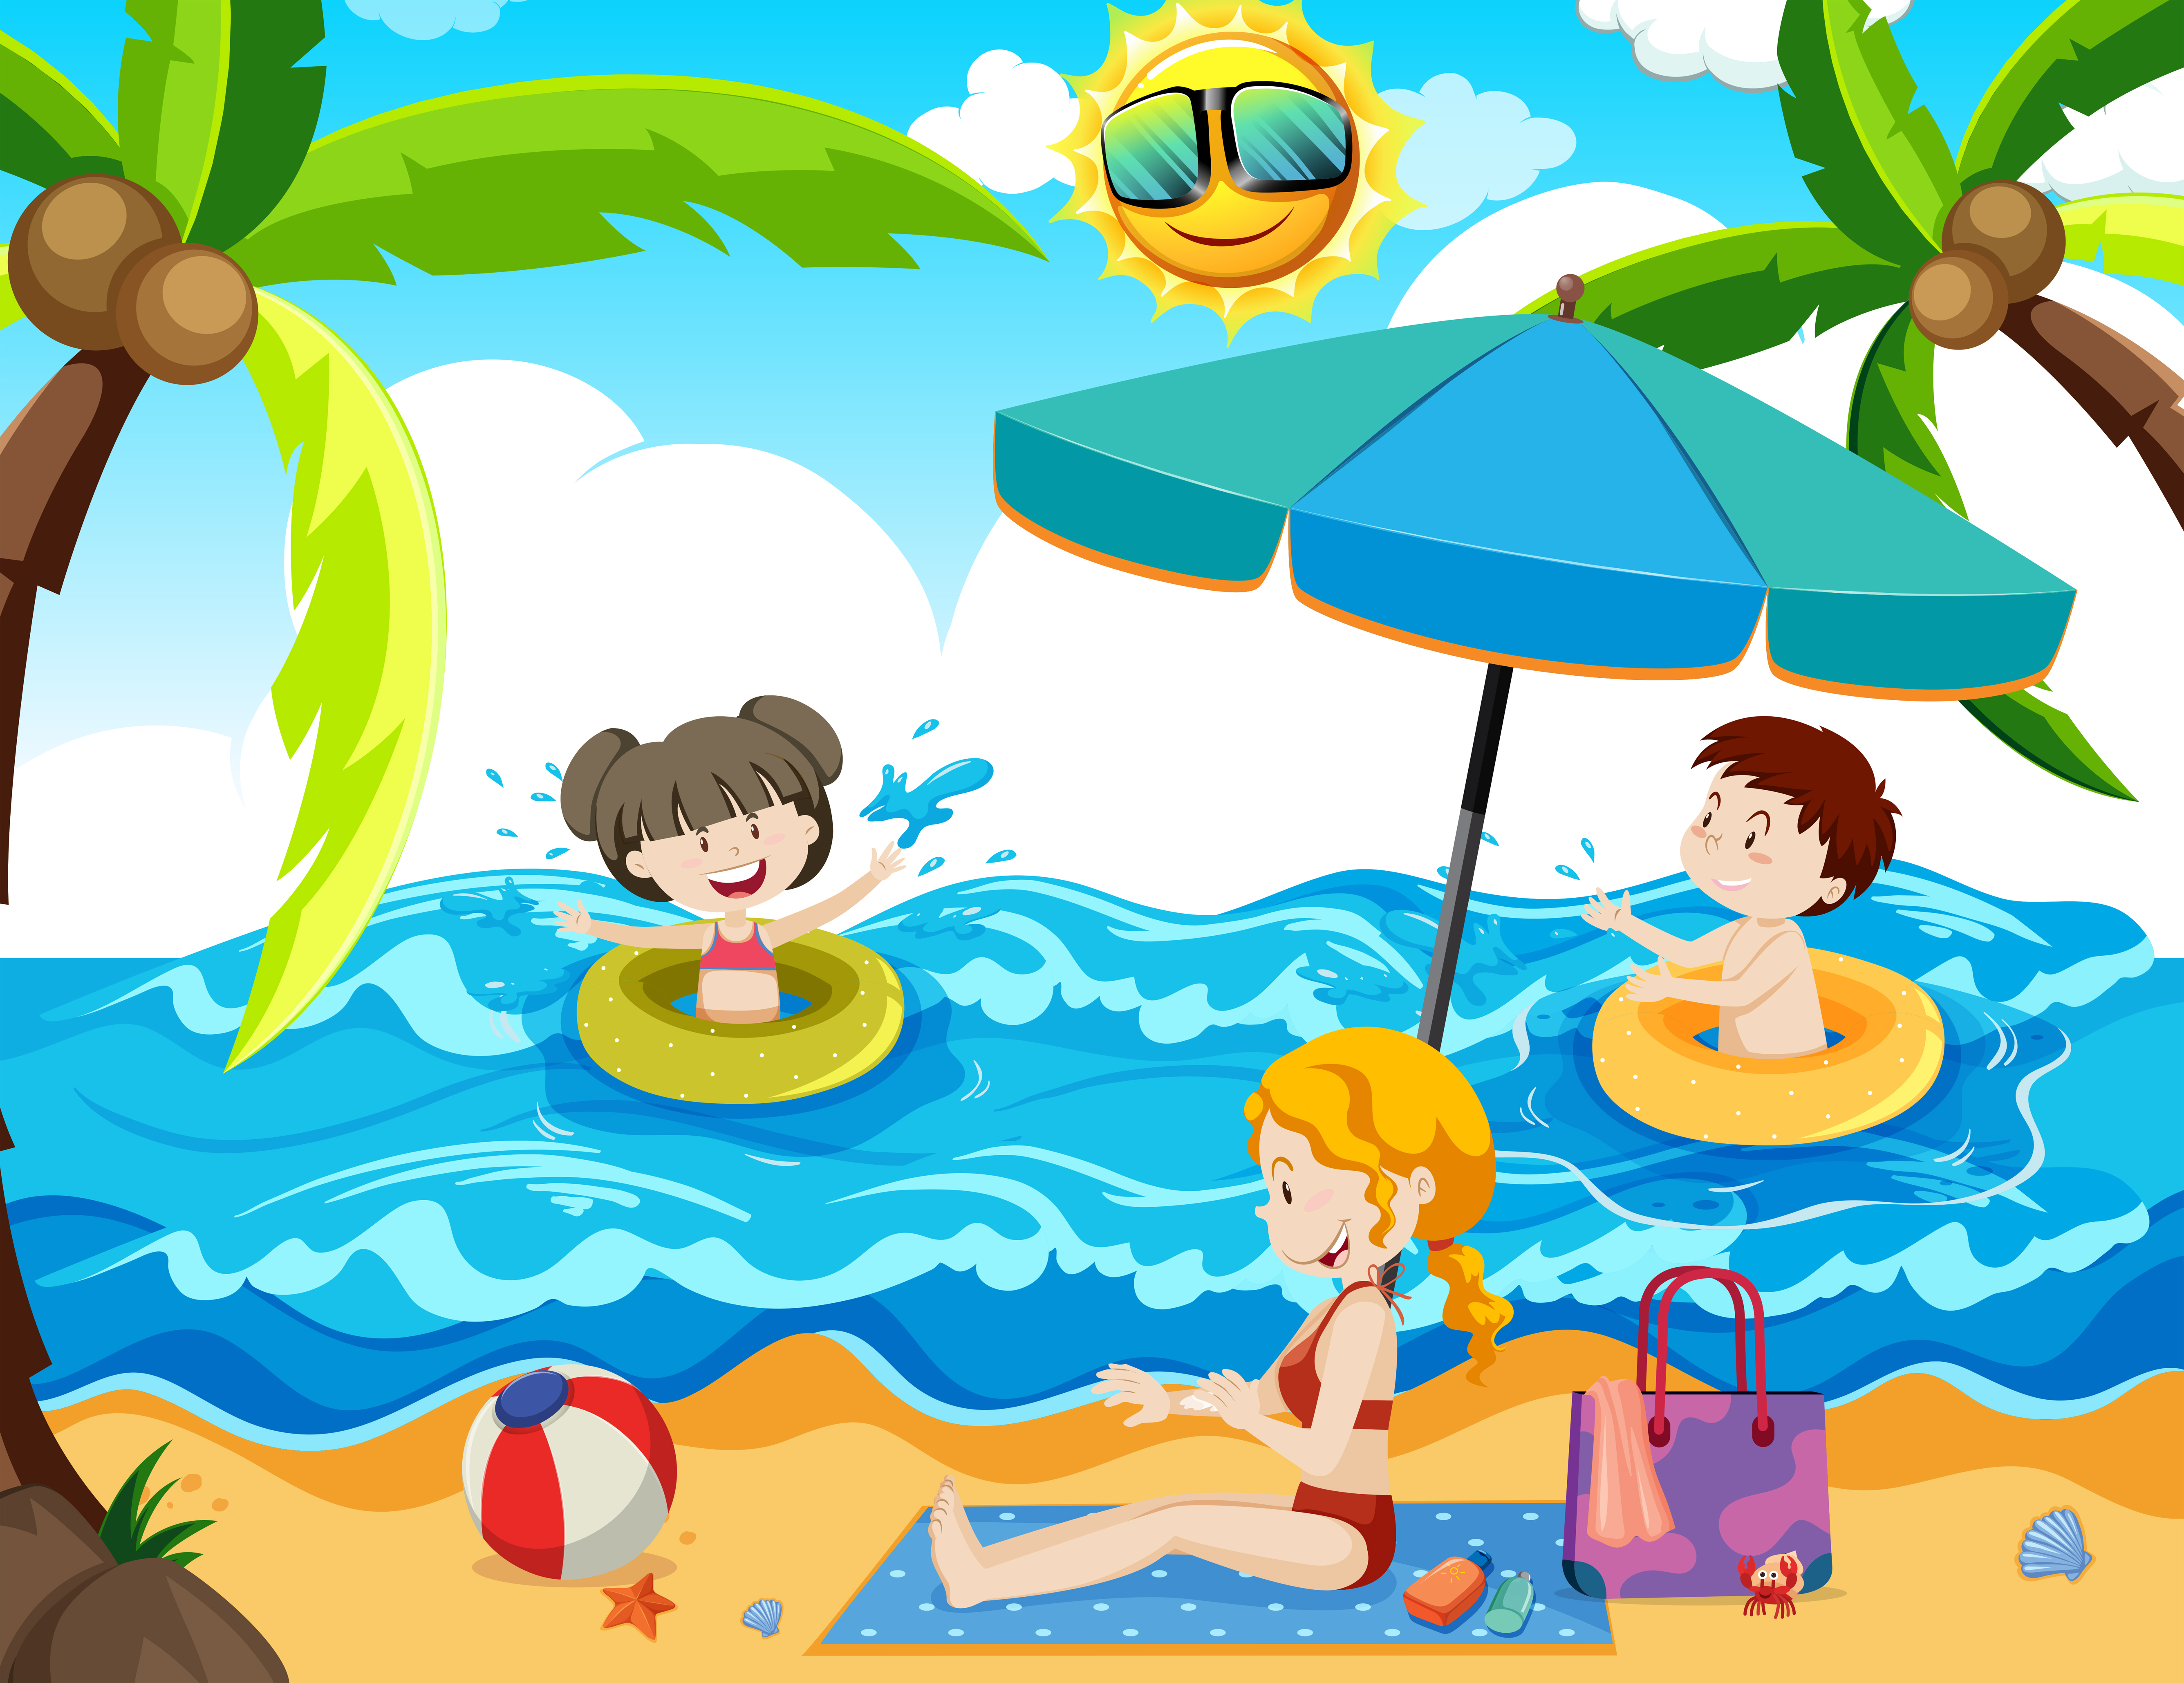 A Family Summer Holiday at Beach - Download Free Vectors ...